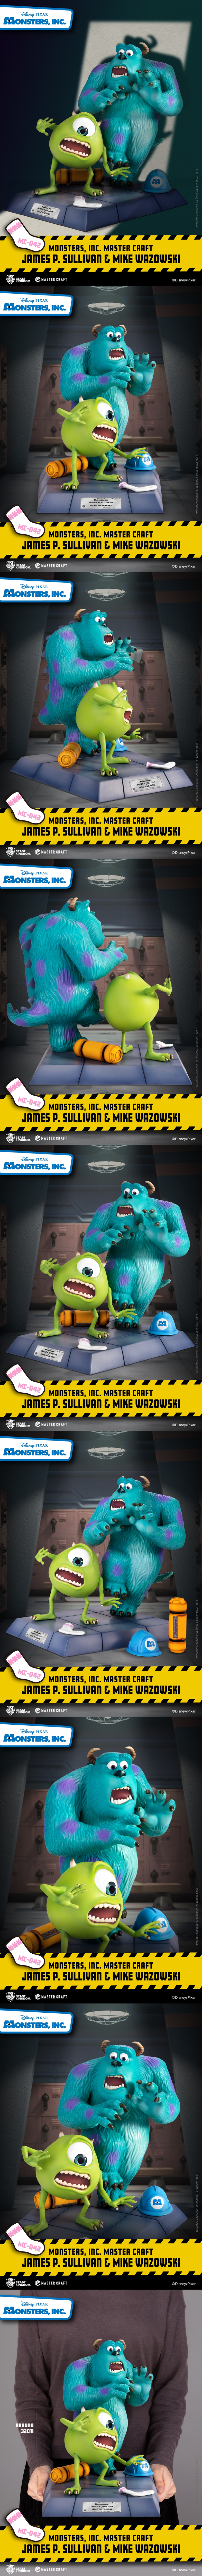 Disney Pixar Monsters, Inc. Master Craft James P. Sullivan & Mike